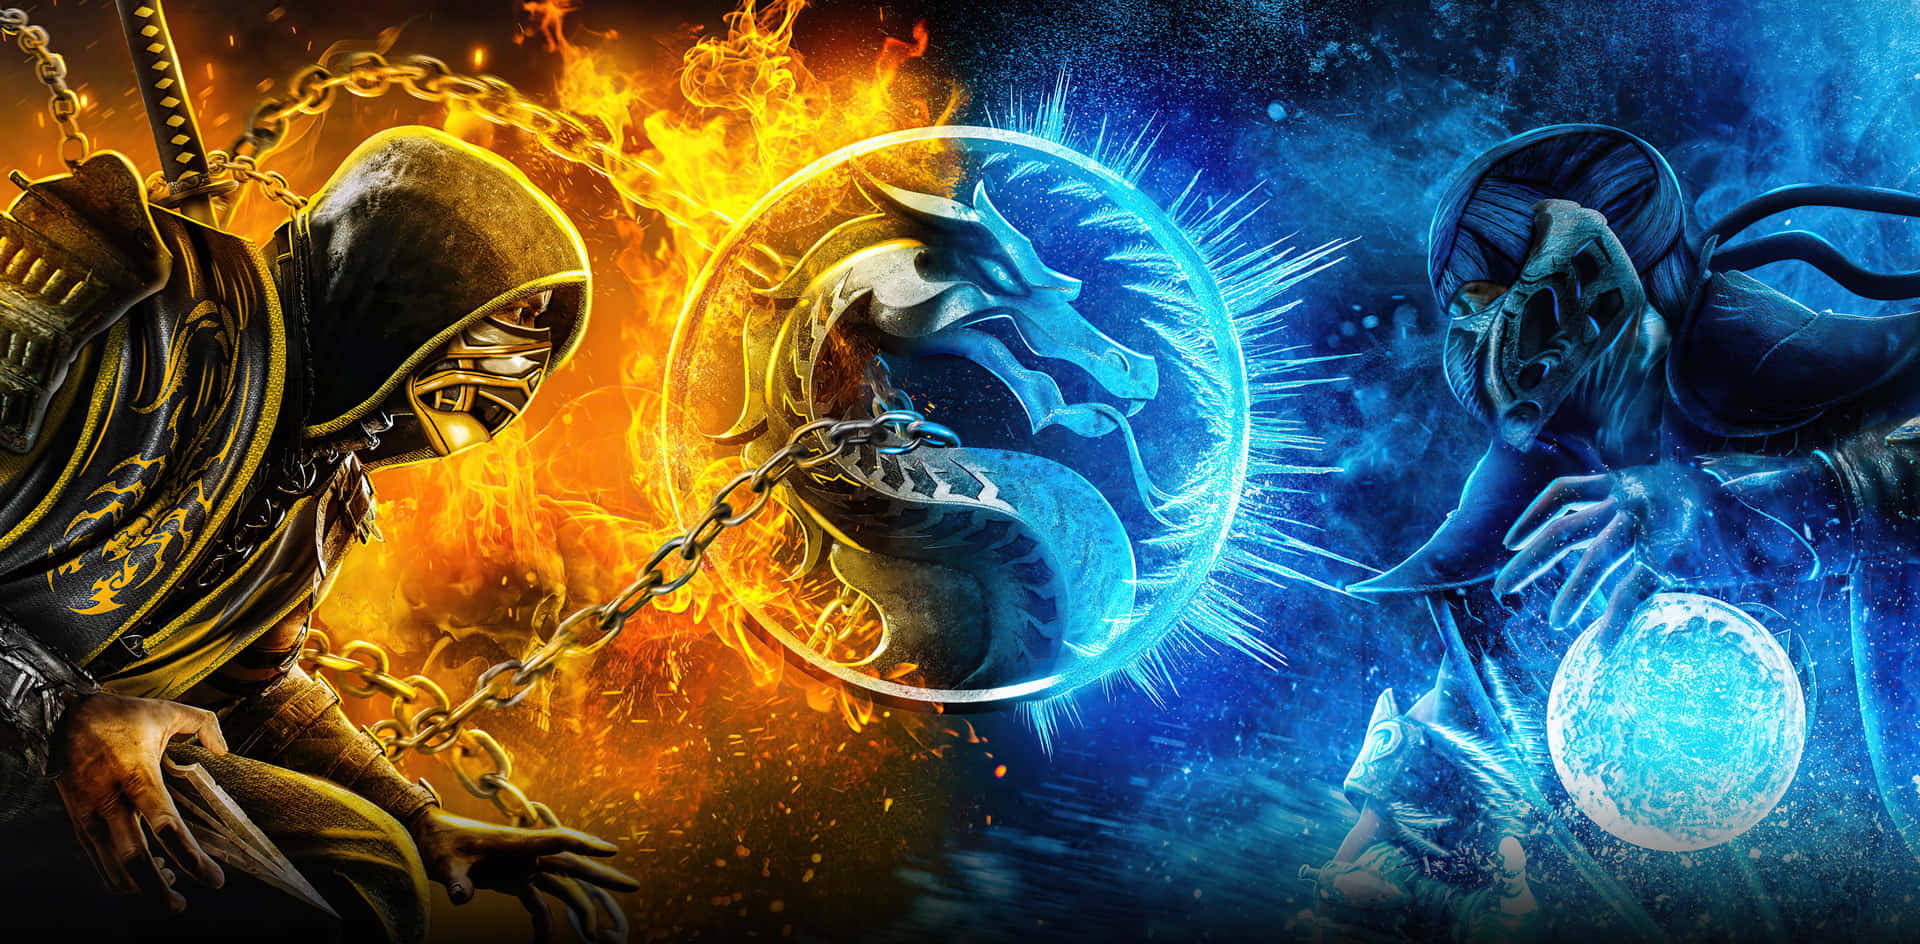 Bliv med i kampen i Mortal Kombat 2021! Wallpaper